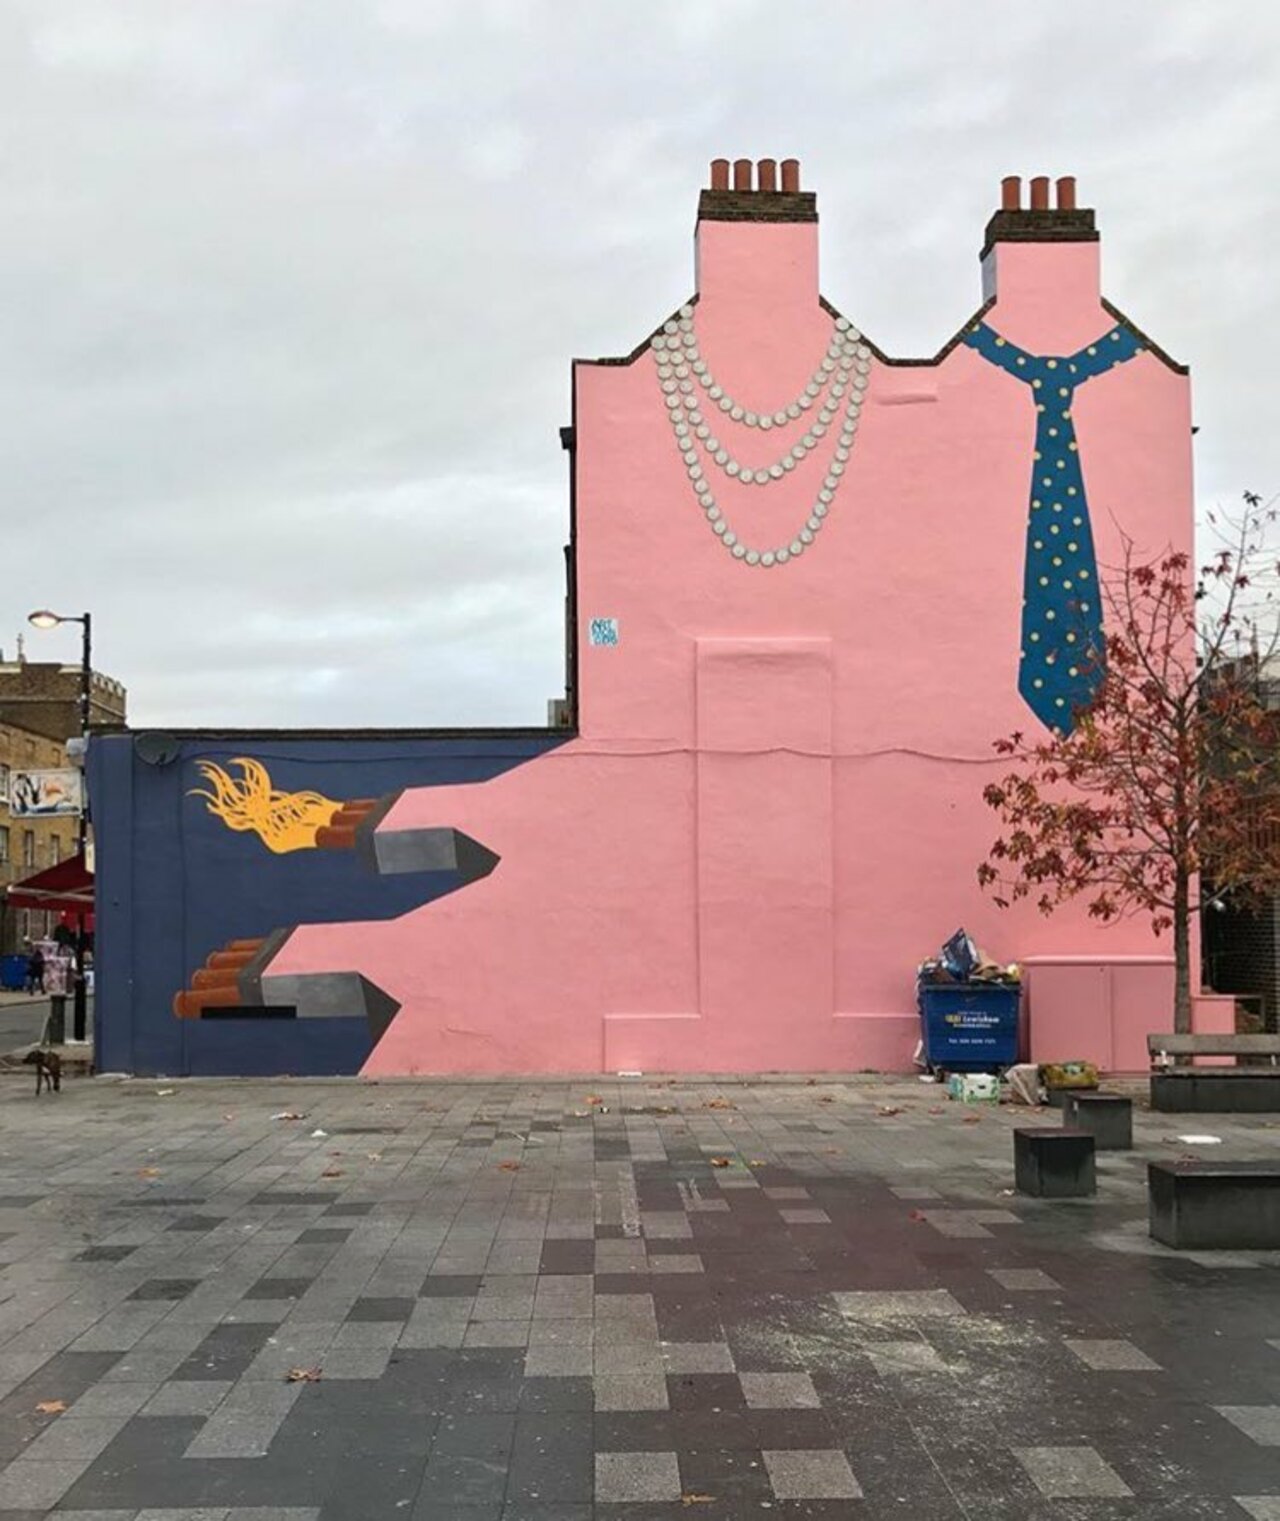 Street Art in London by ArtMongers #art #mural #graffiti #streetart https://t.co/70uJyhIVTc